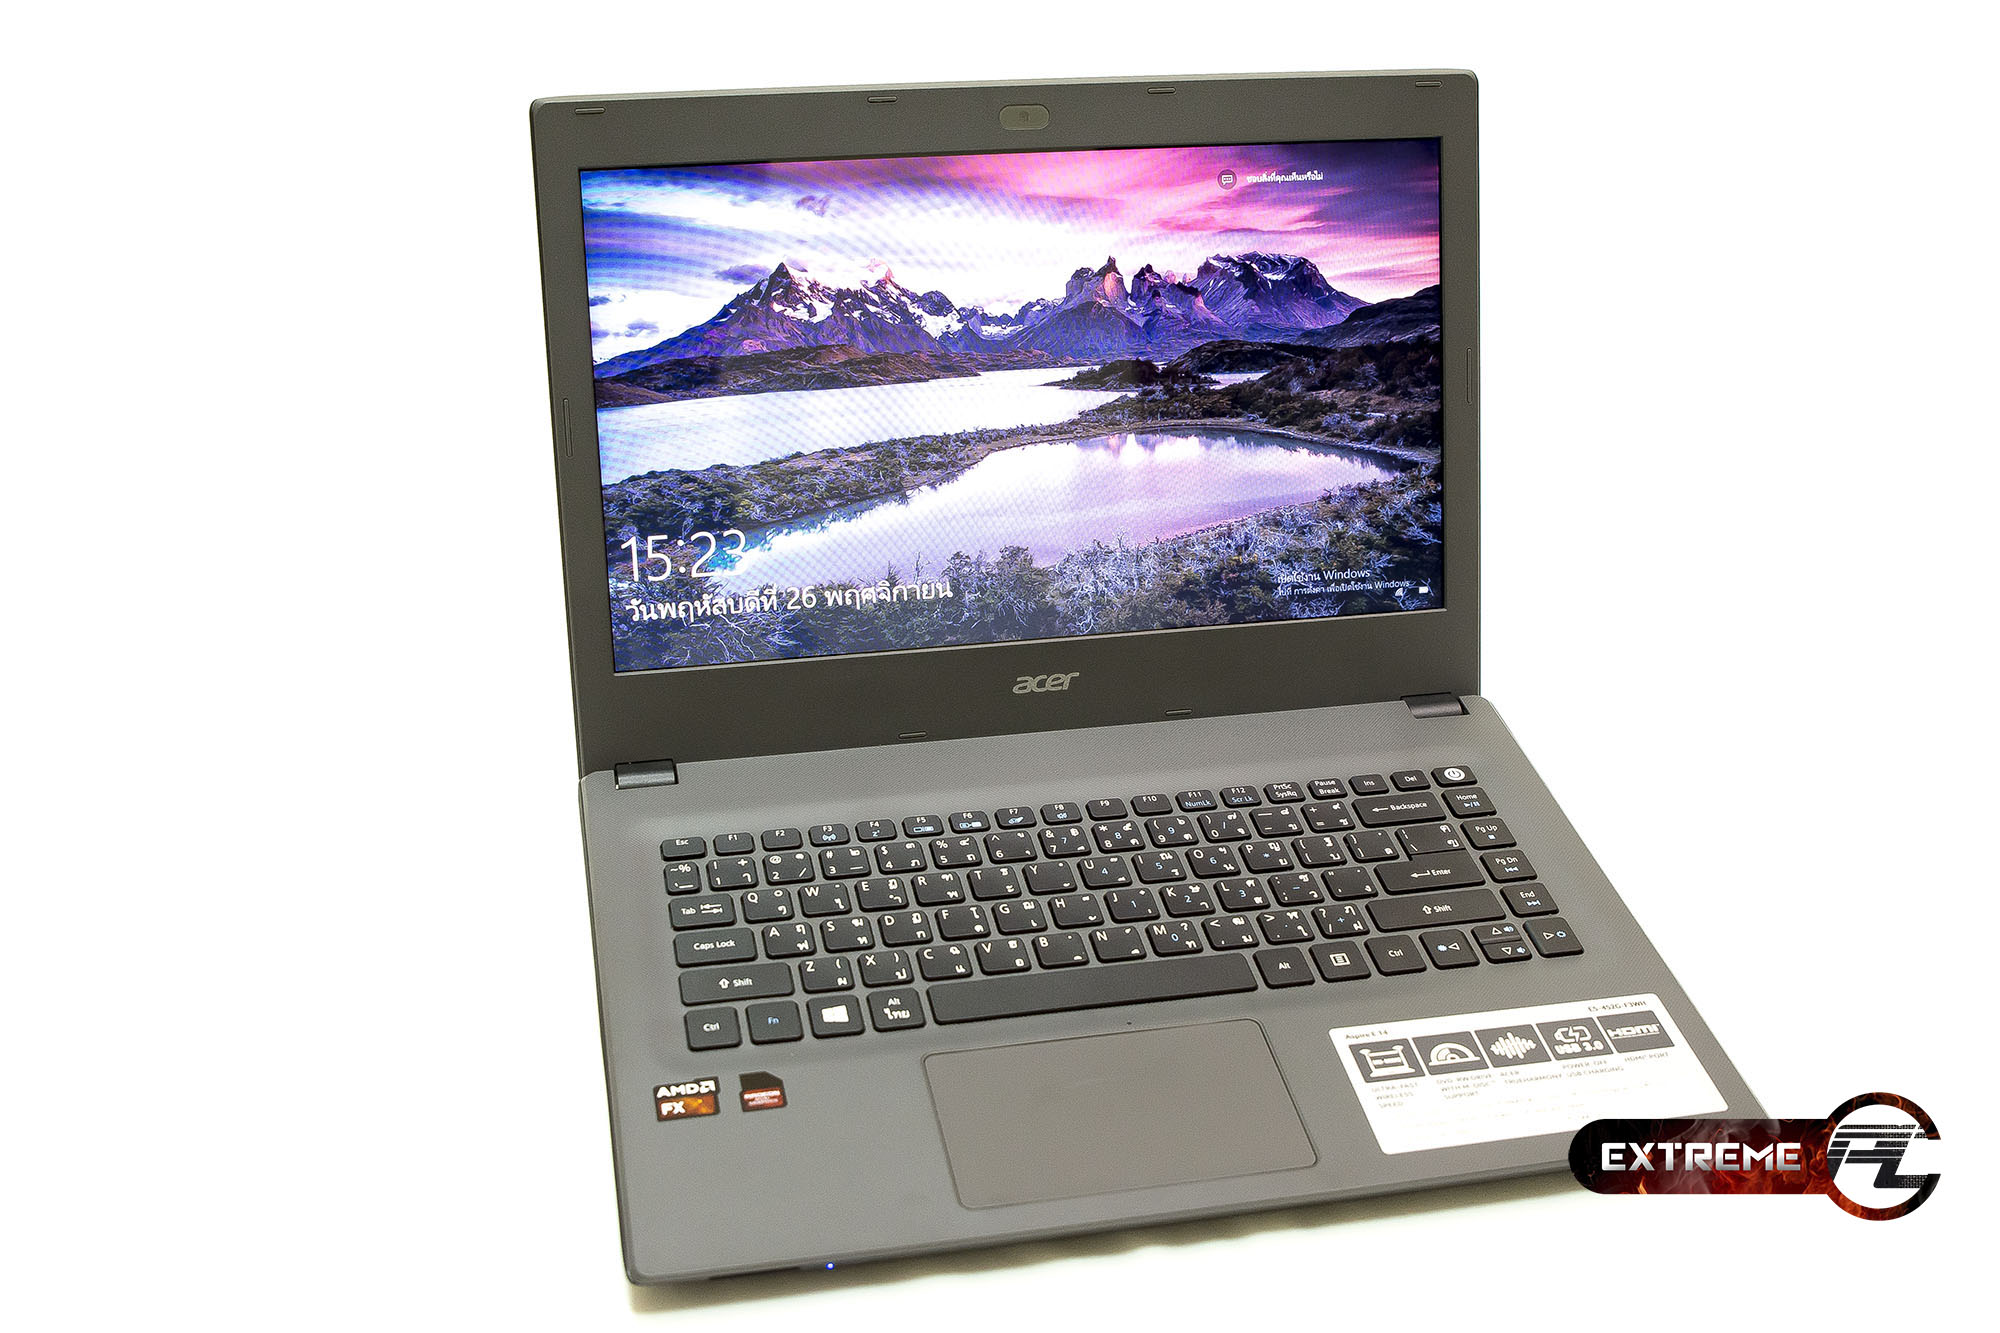 Review: Acer Aspire E14 E5-452G-F3WH ขุมพลัง FX8800p+dual graphics สุดคุ้ม 19,900 เท่านั้น